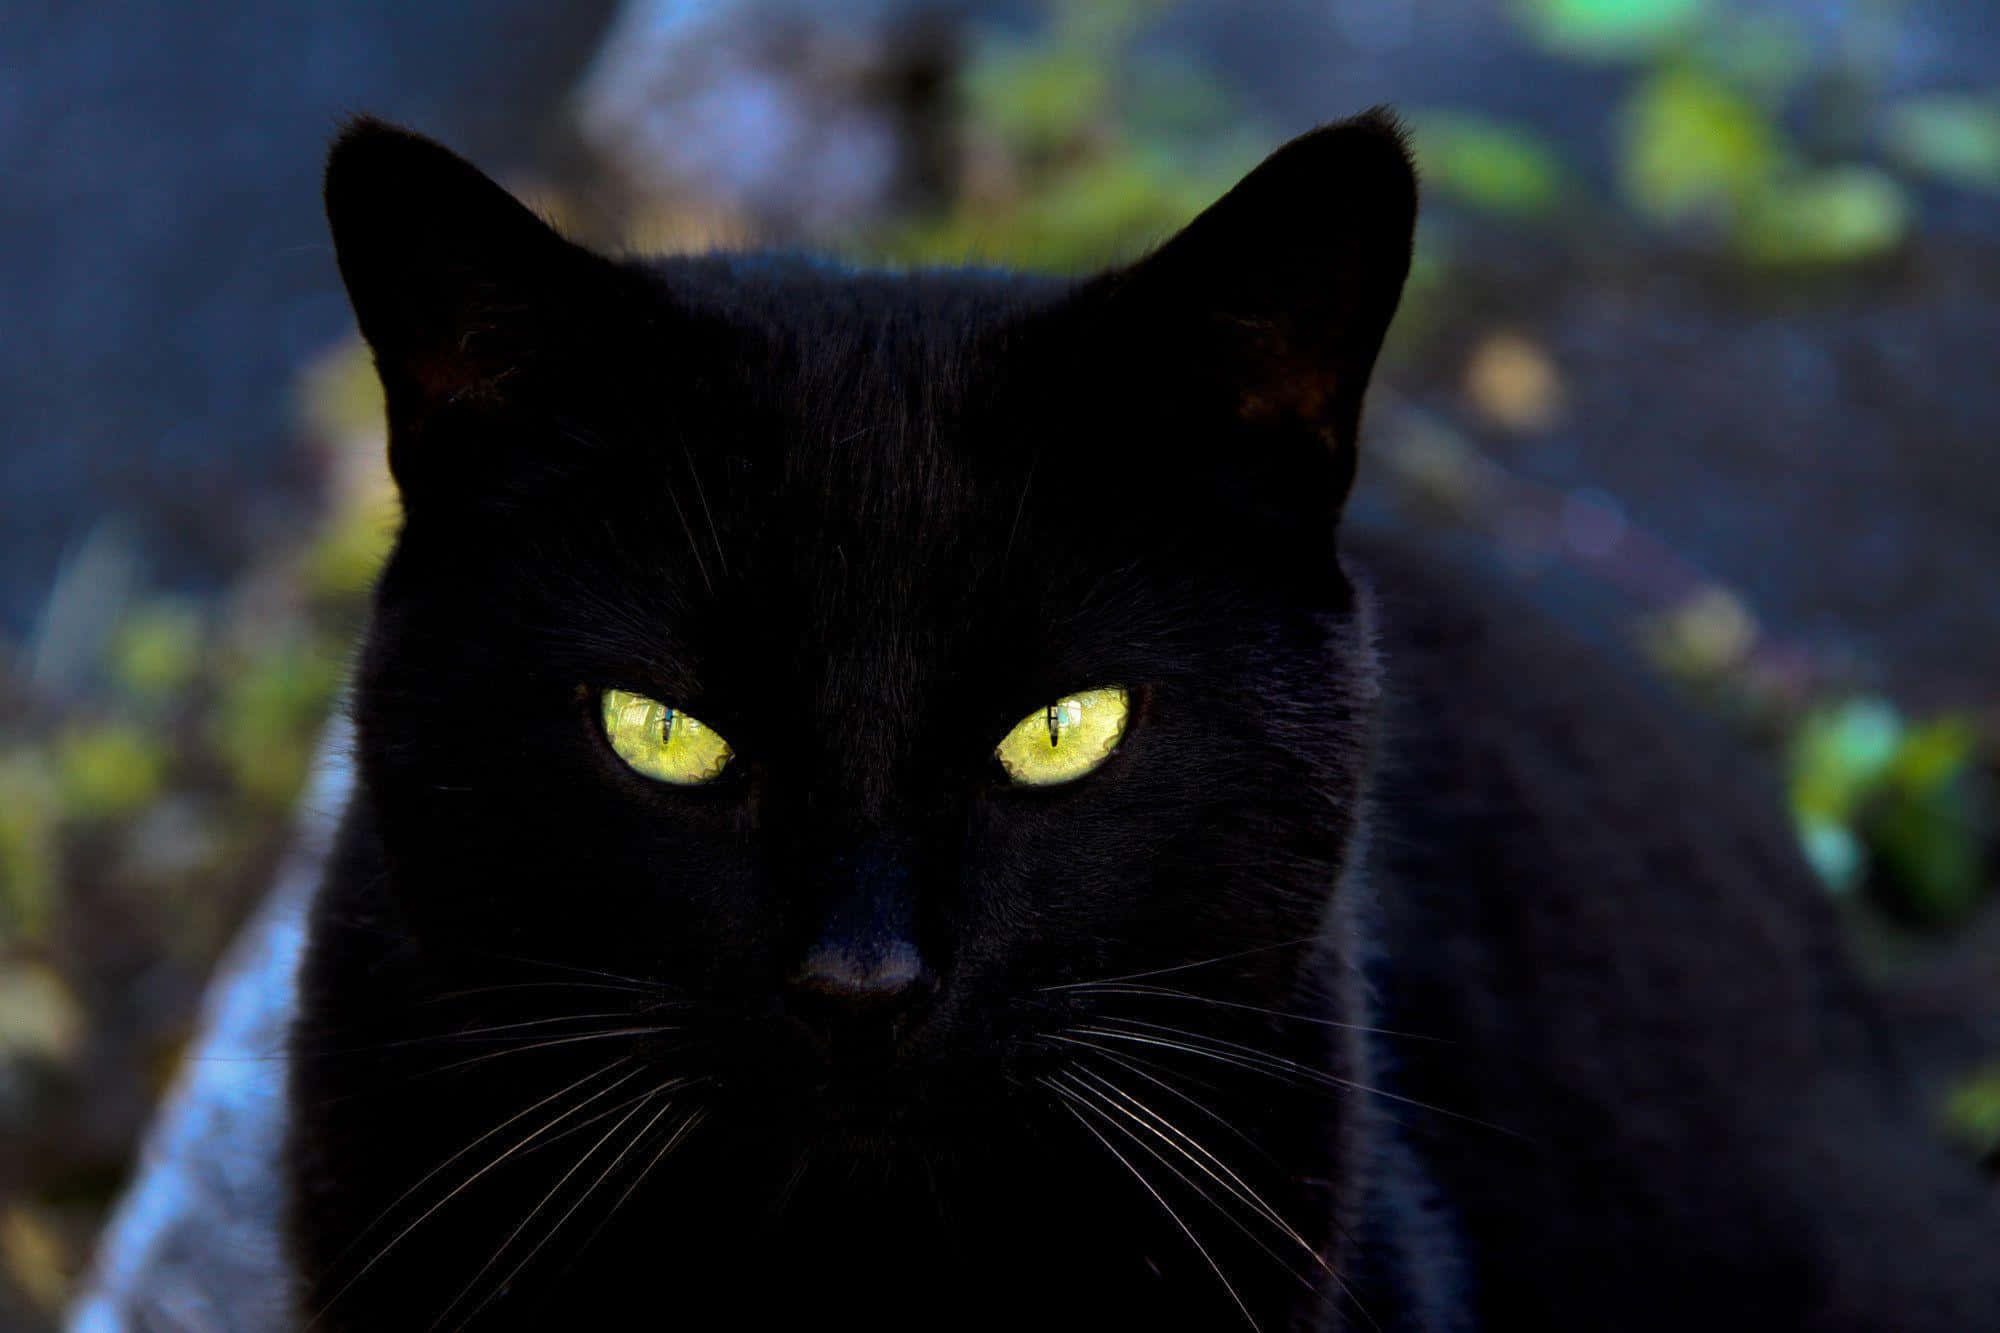 "The Black Cat Lurks"